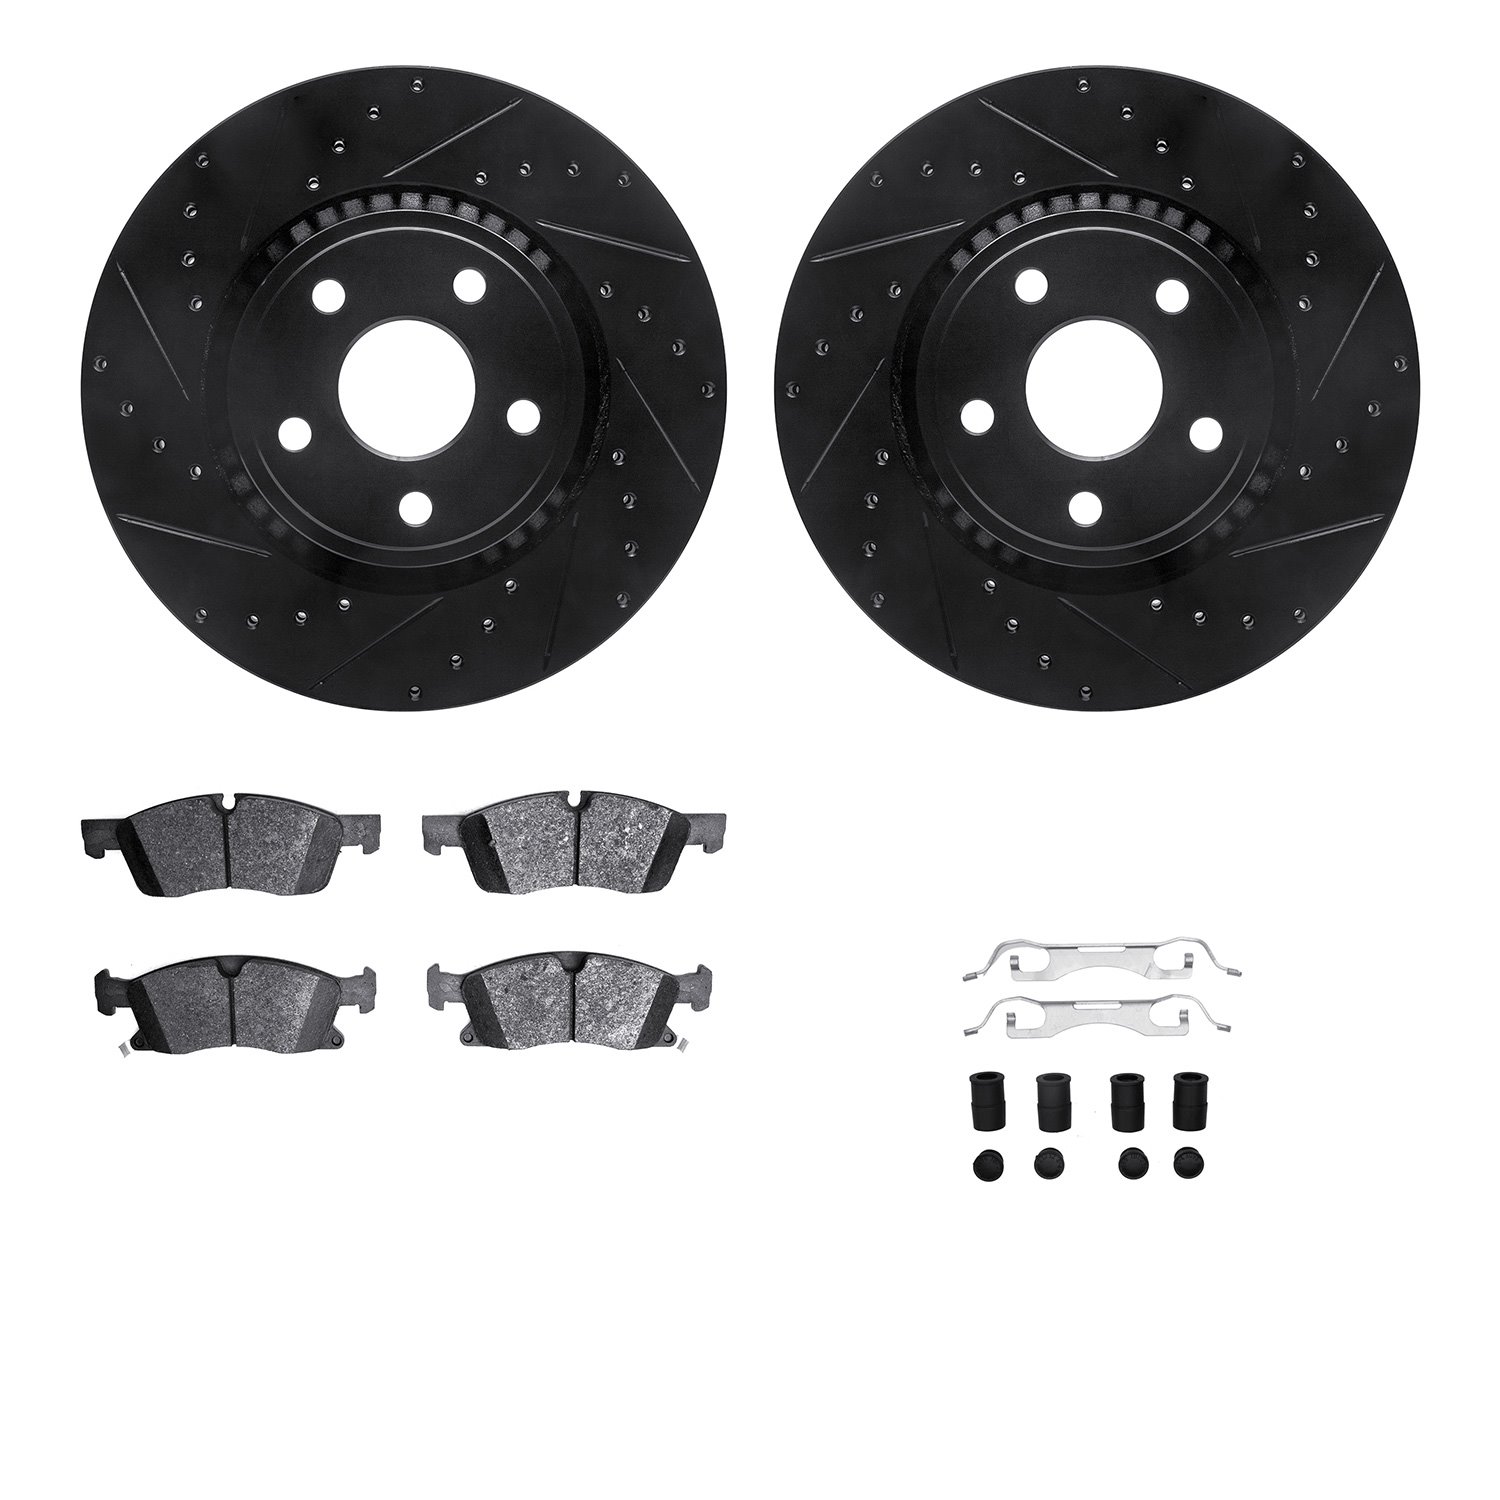 8312-42049 Drilled/Slotted Brake Rotors with 3000-Series Ceramic Brake Pads Kit & Hardware [Black], Fits Select Mopar, Position: